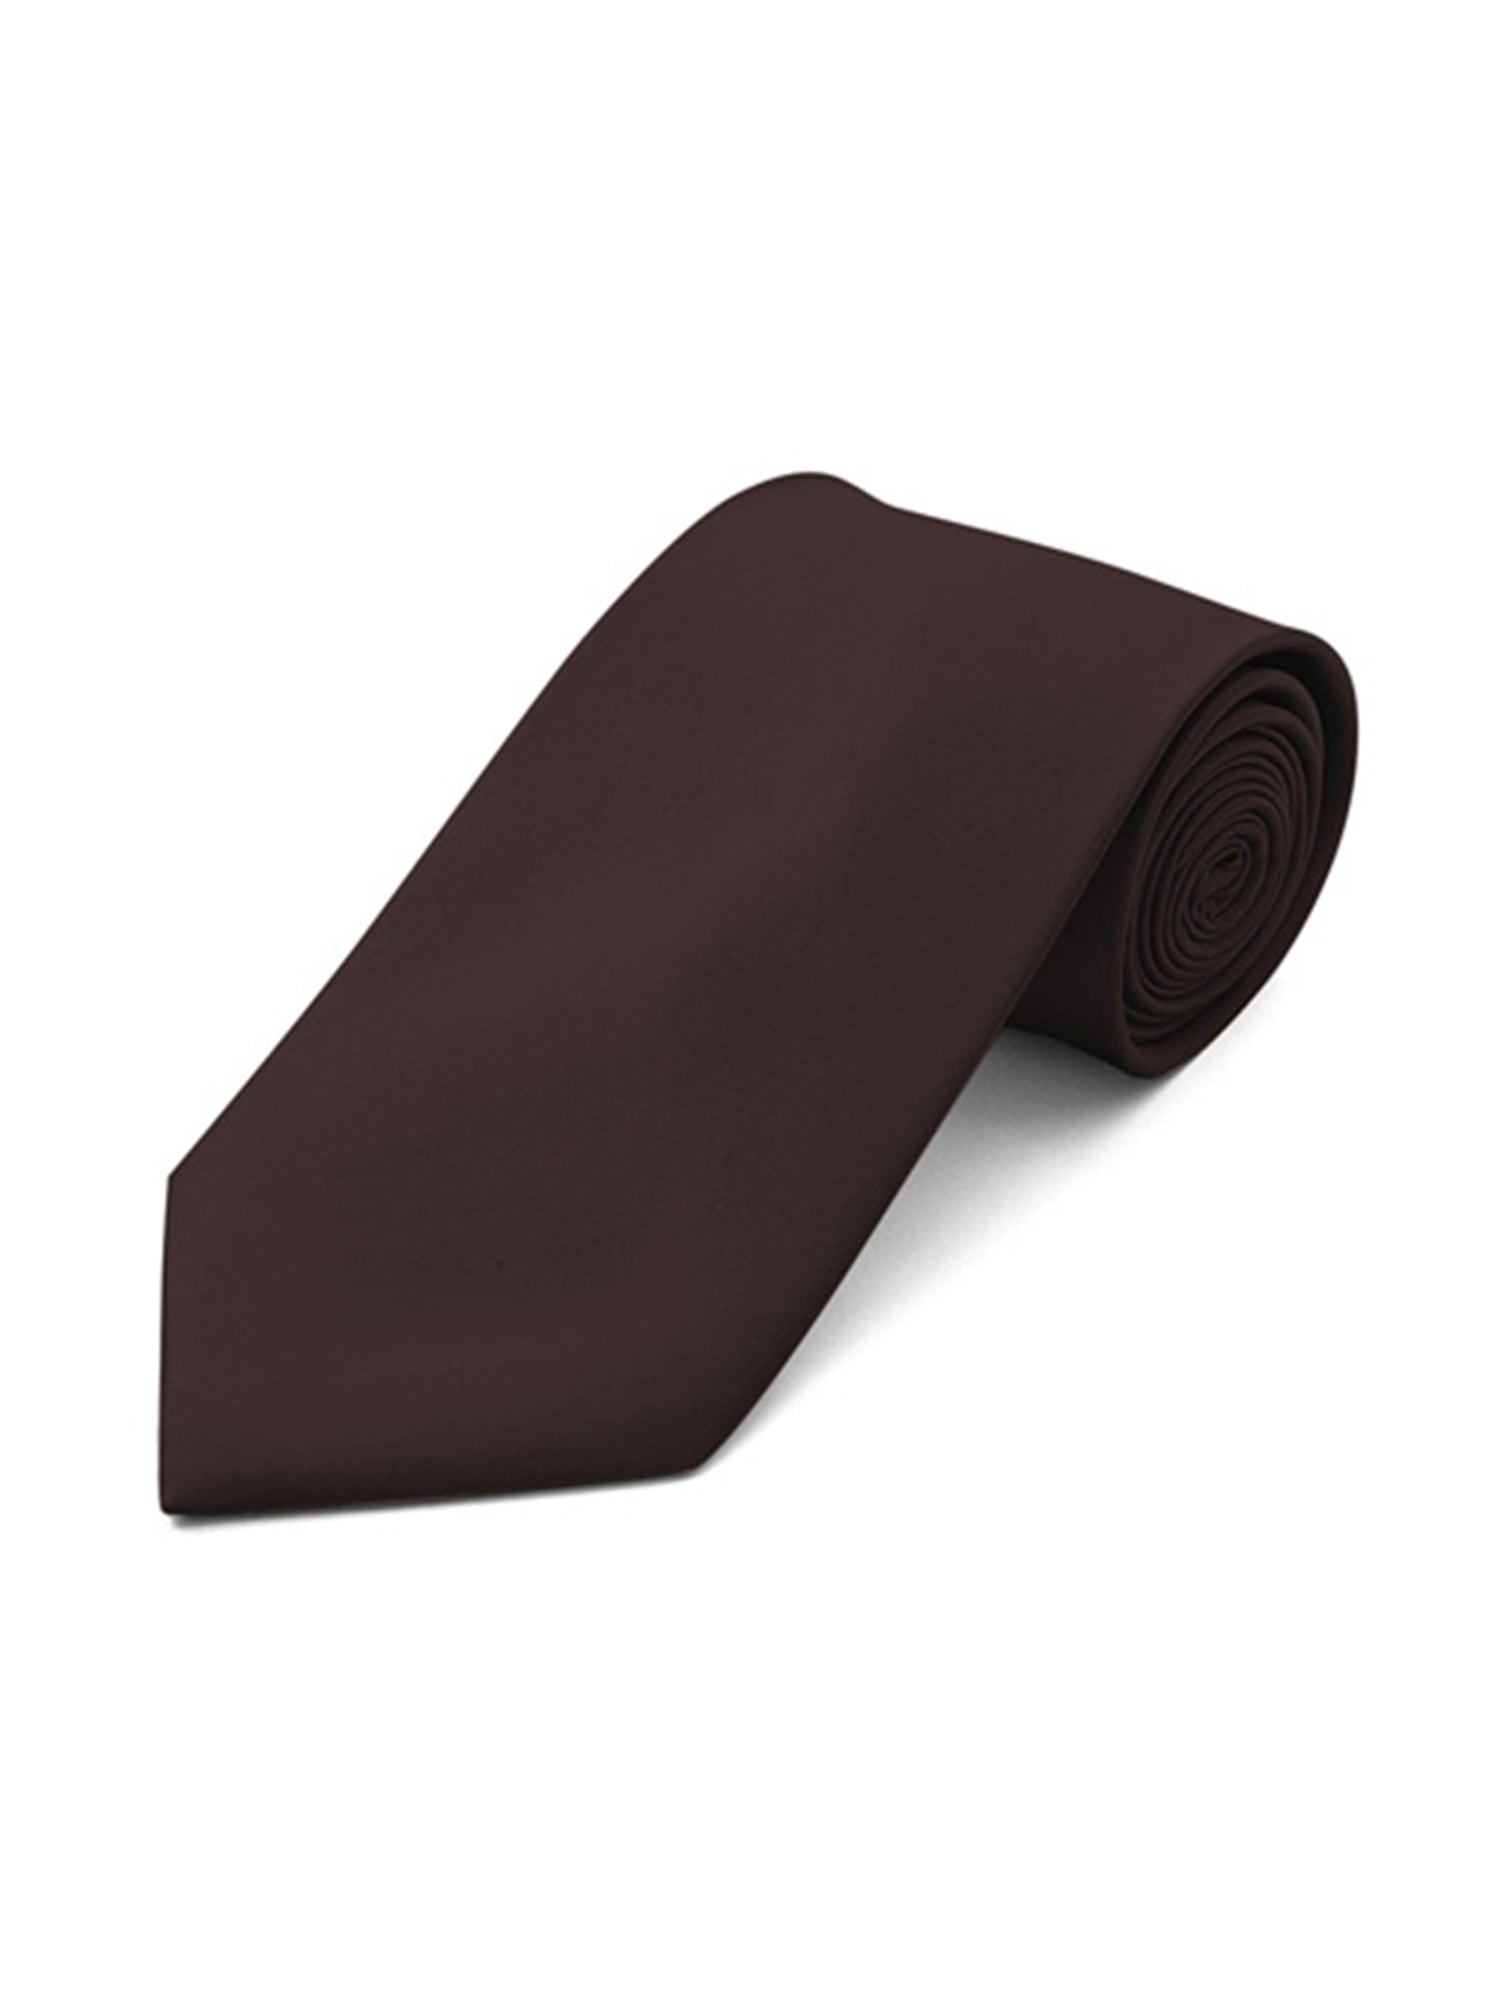 Men's Solid Color 2.75 Inch Wide And 57 Inch Long Slim Neckties Neck Tie TheDapperTie Brown  